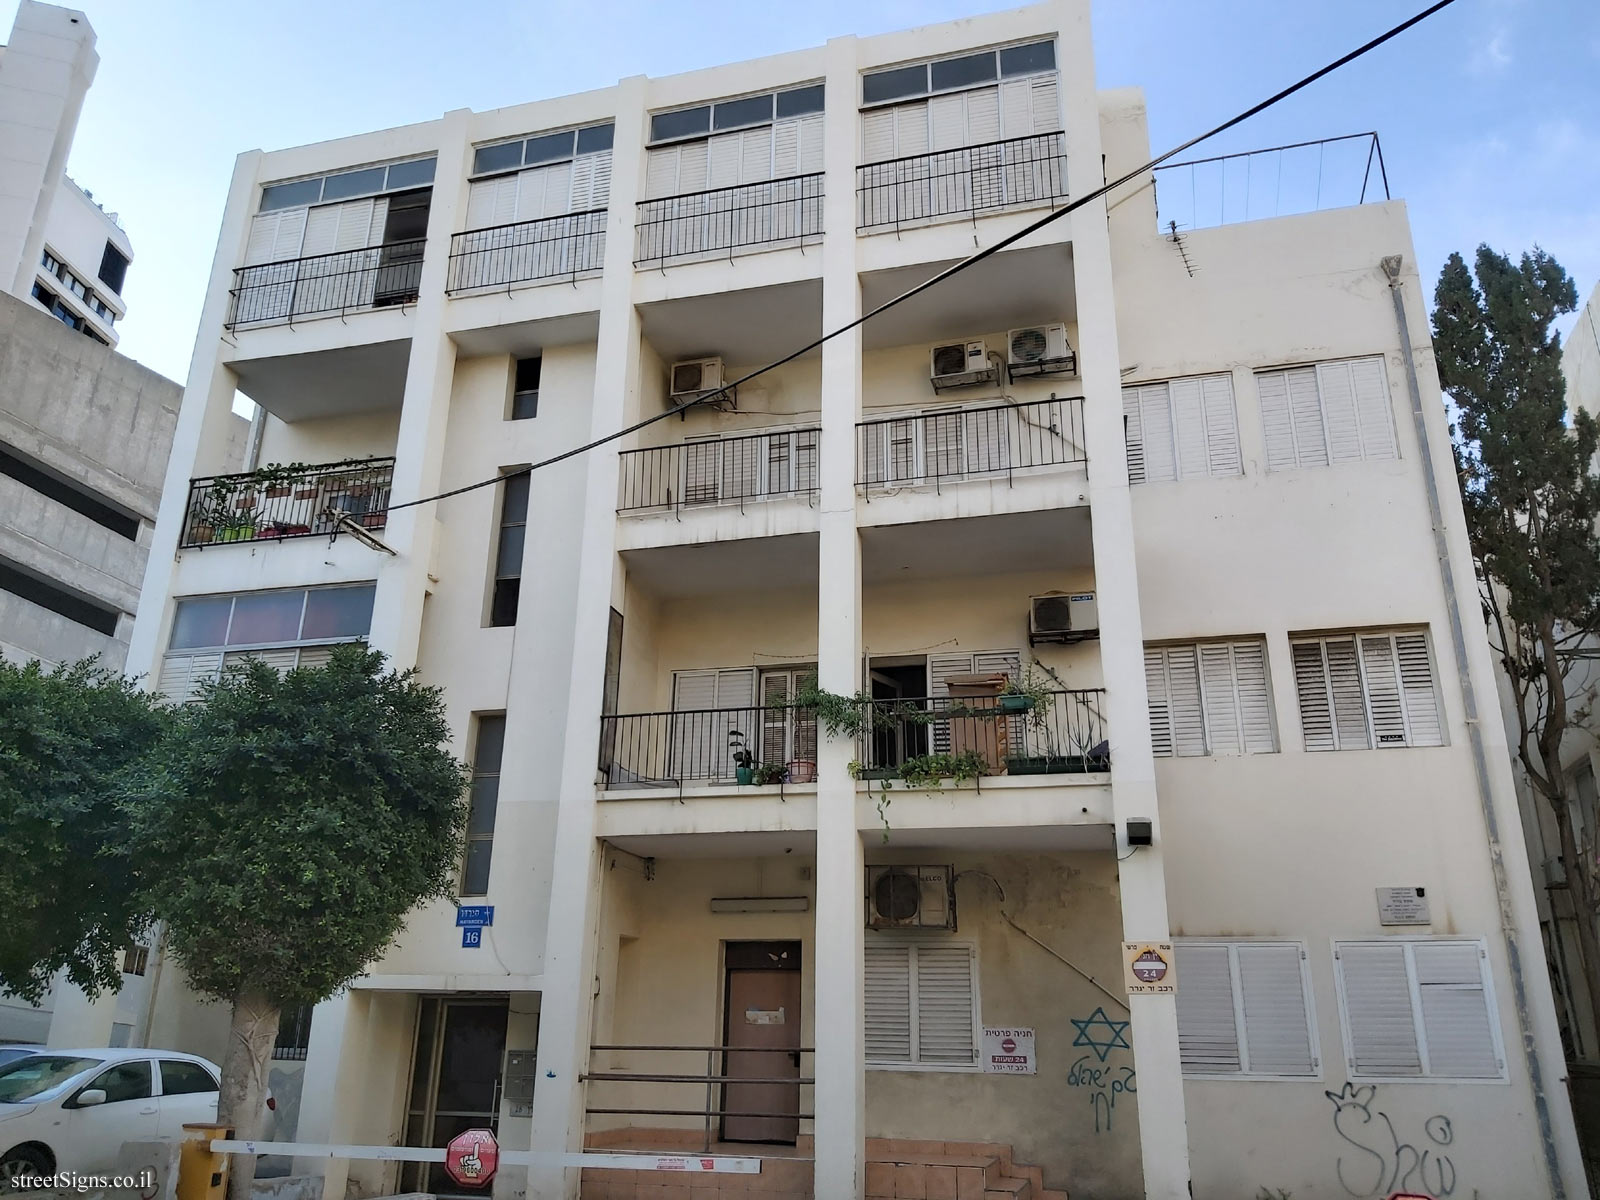 The house of Max Brod - Ha-Yarden St 16, Tel Aviv-Yafo, Israel